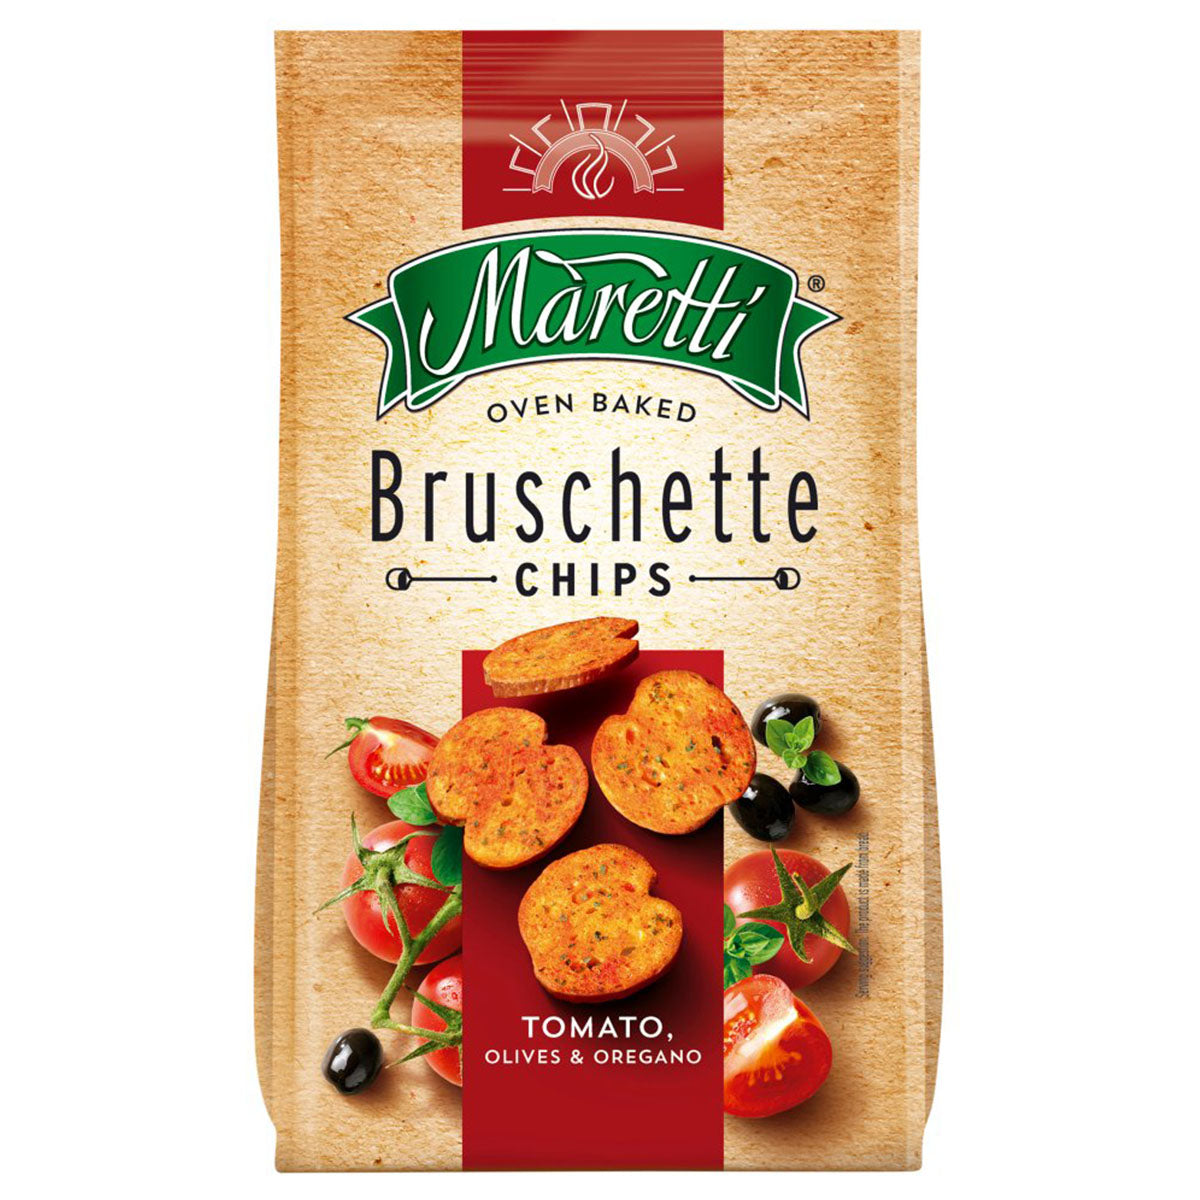 Maretti - Oven Baked Bruschette Chips Tomato Olives & Oregano - 70g - Continental Food Store